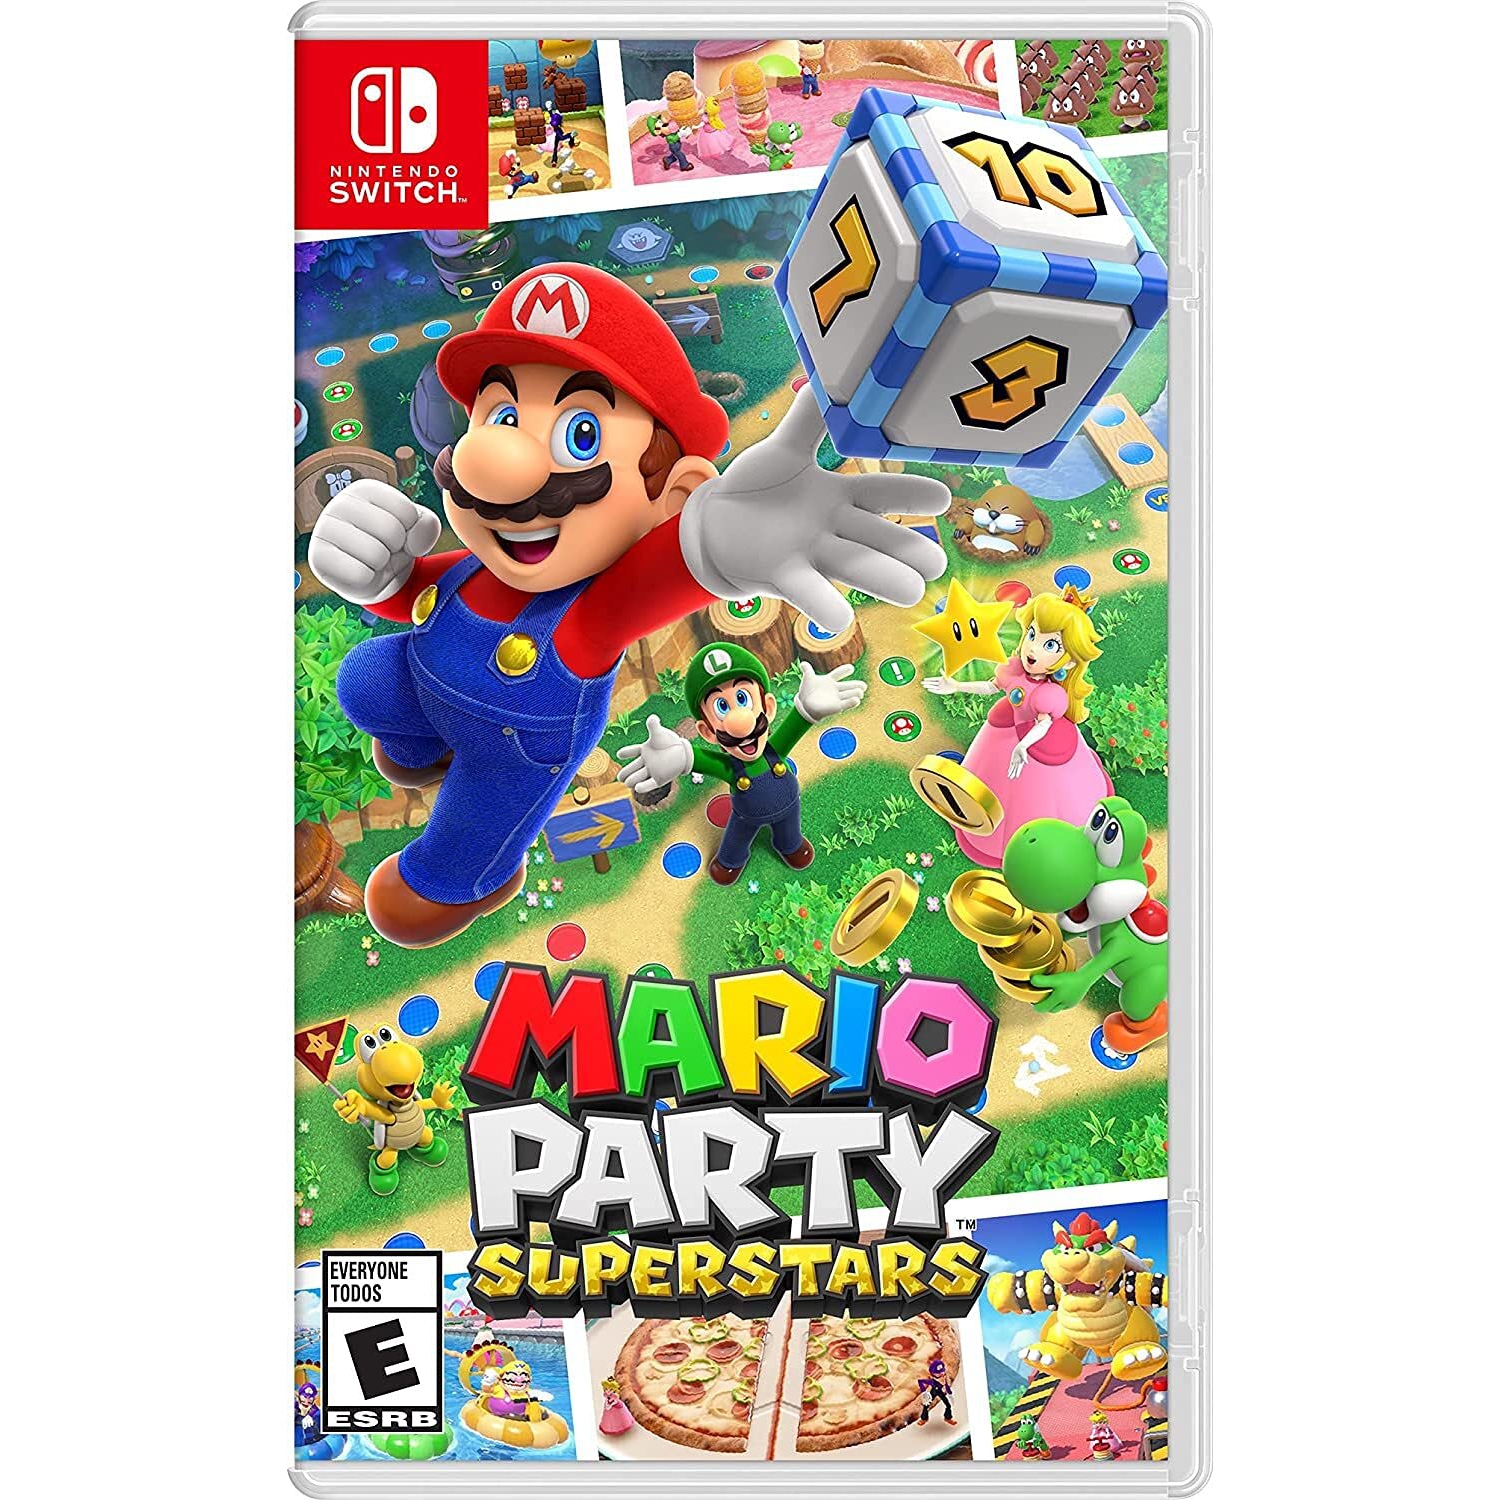 MARIO PARTY SUPERSTARS- Nintendo Switch, Brand New